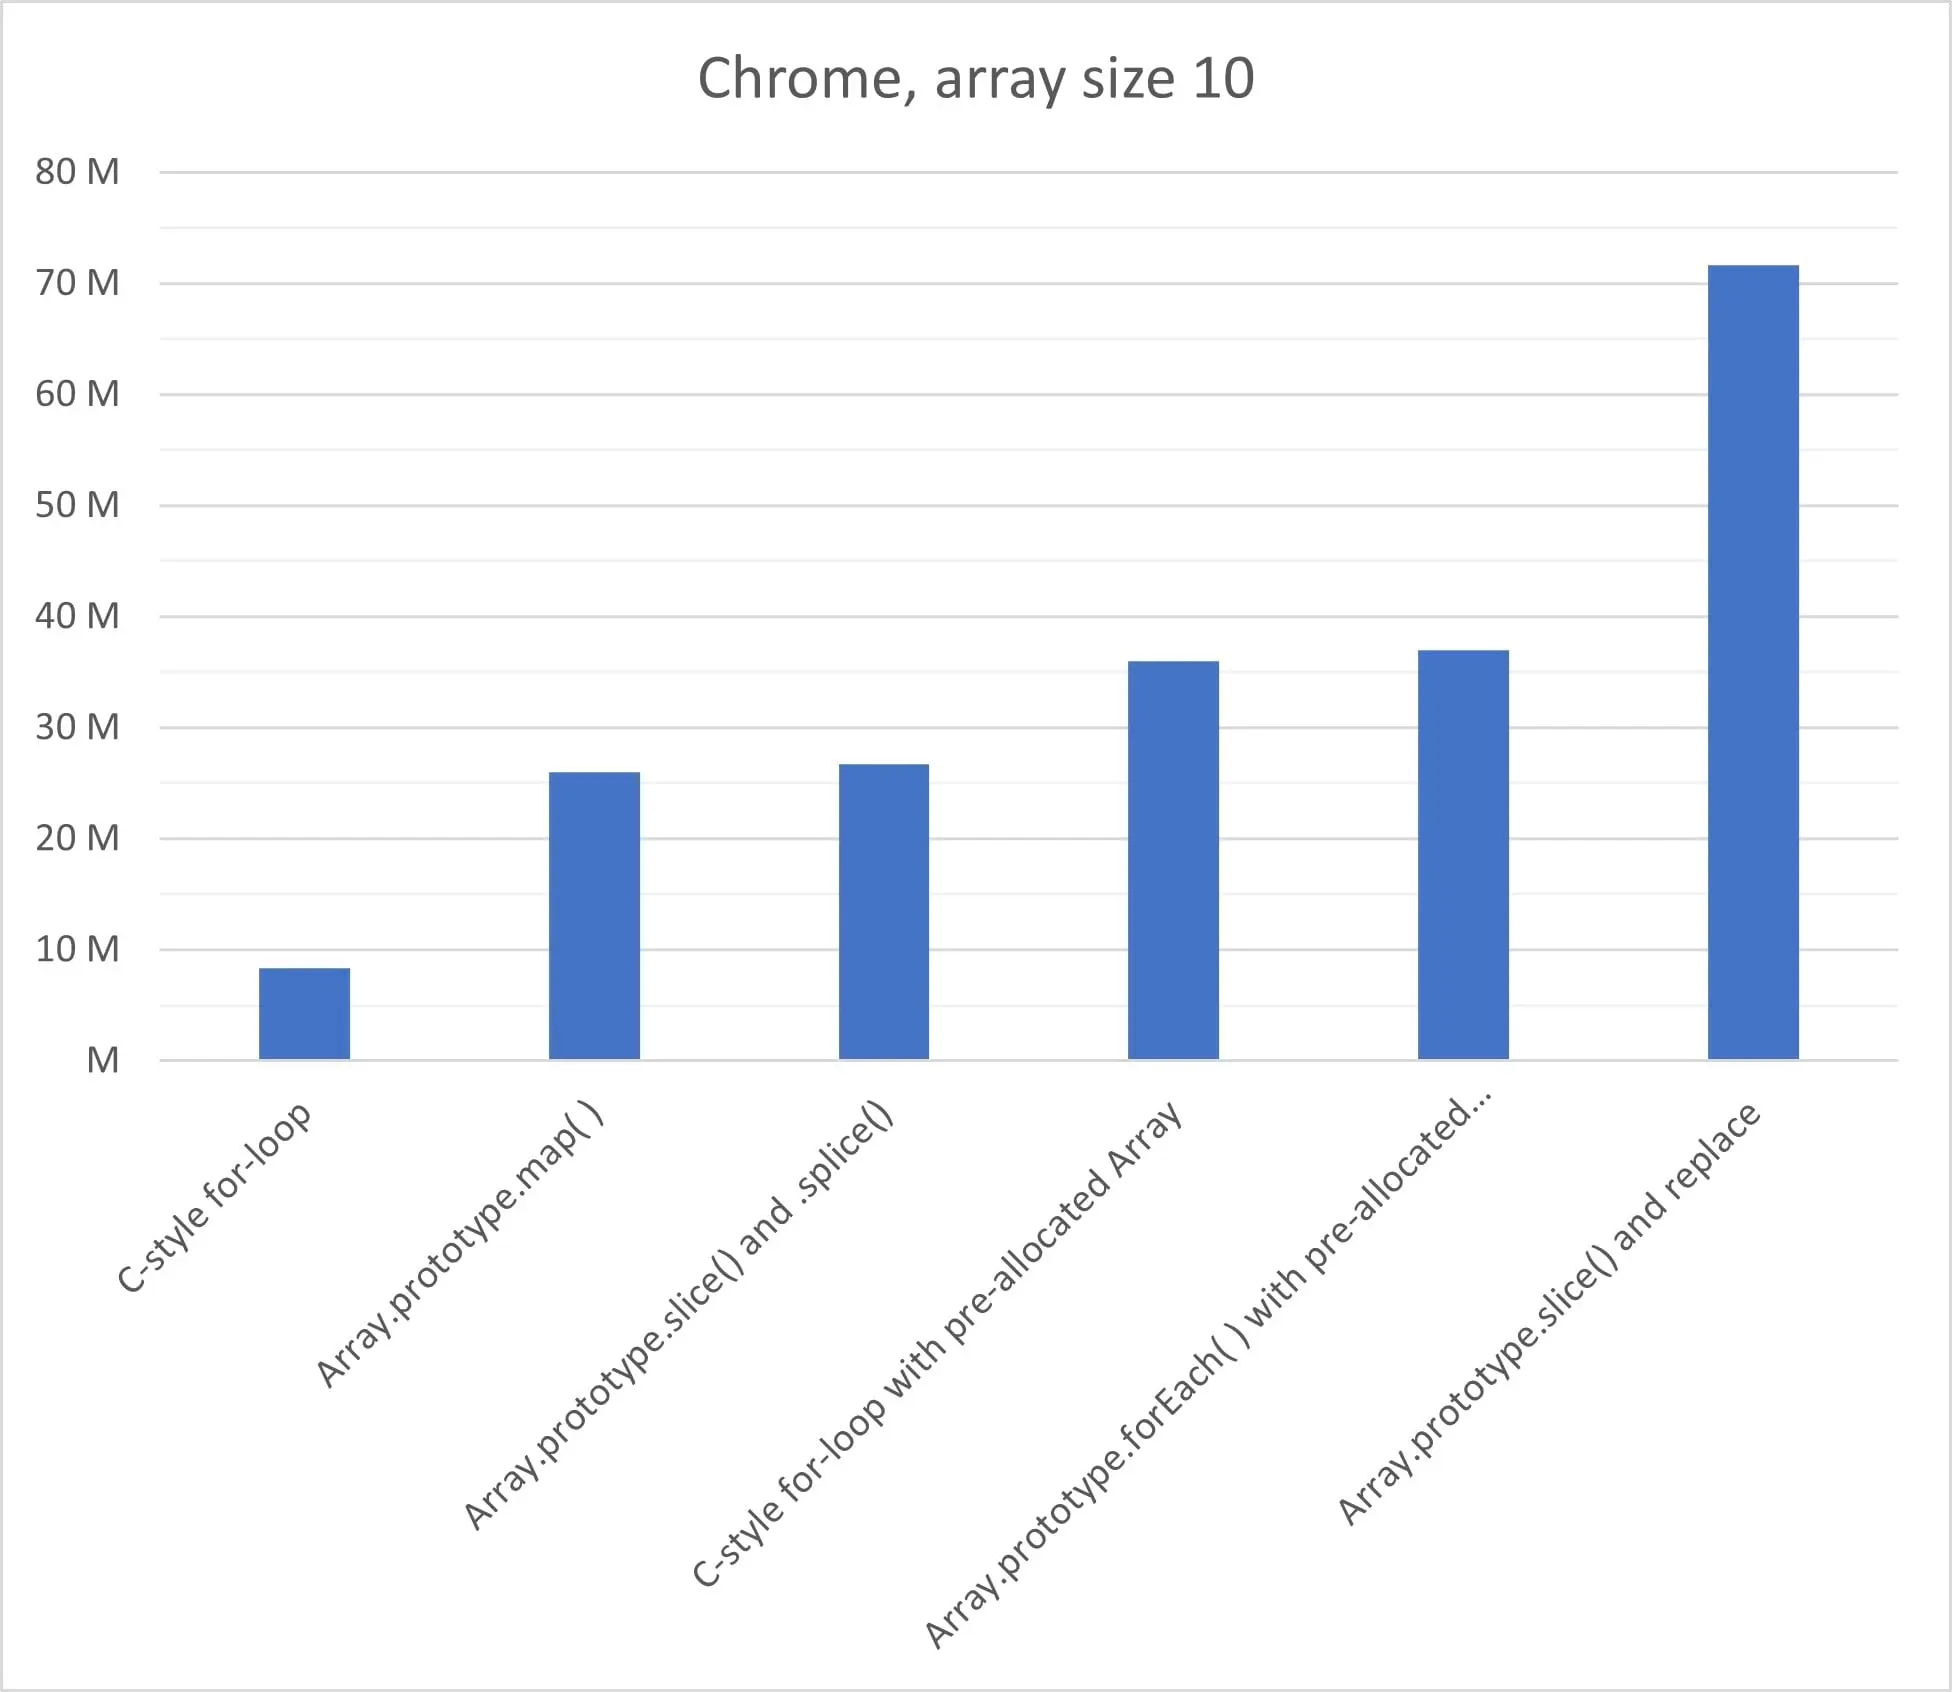 Chrome benchmark at array size 10